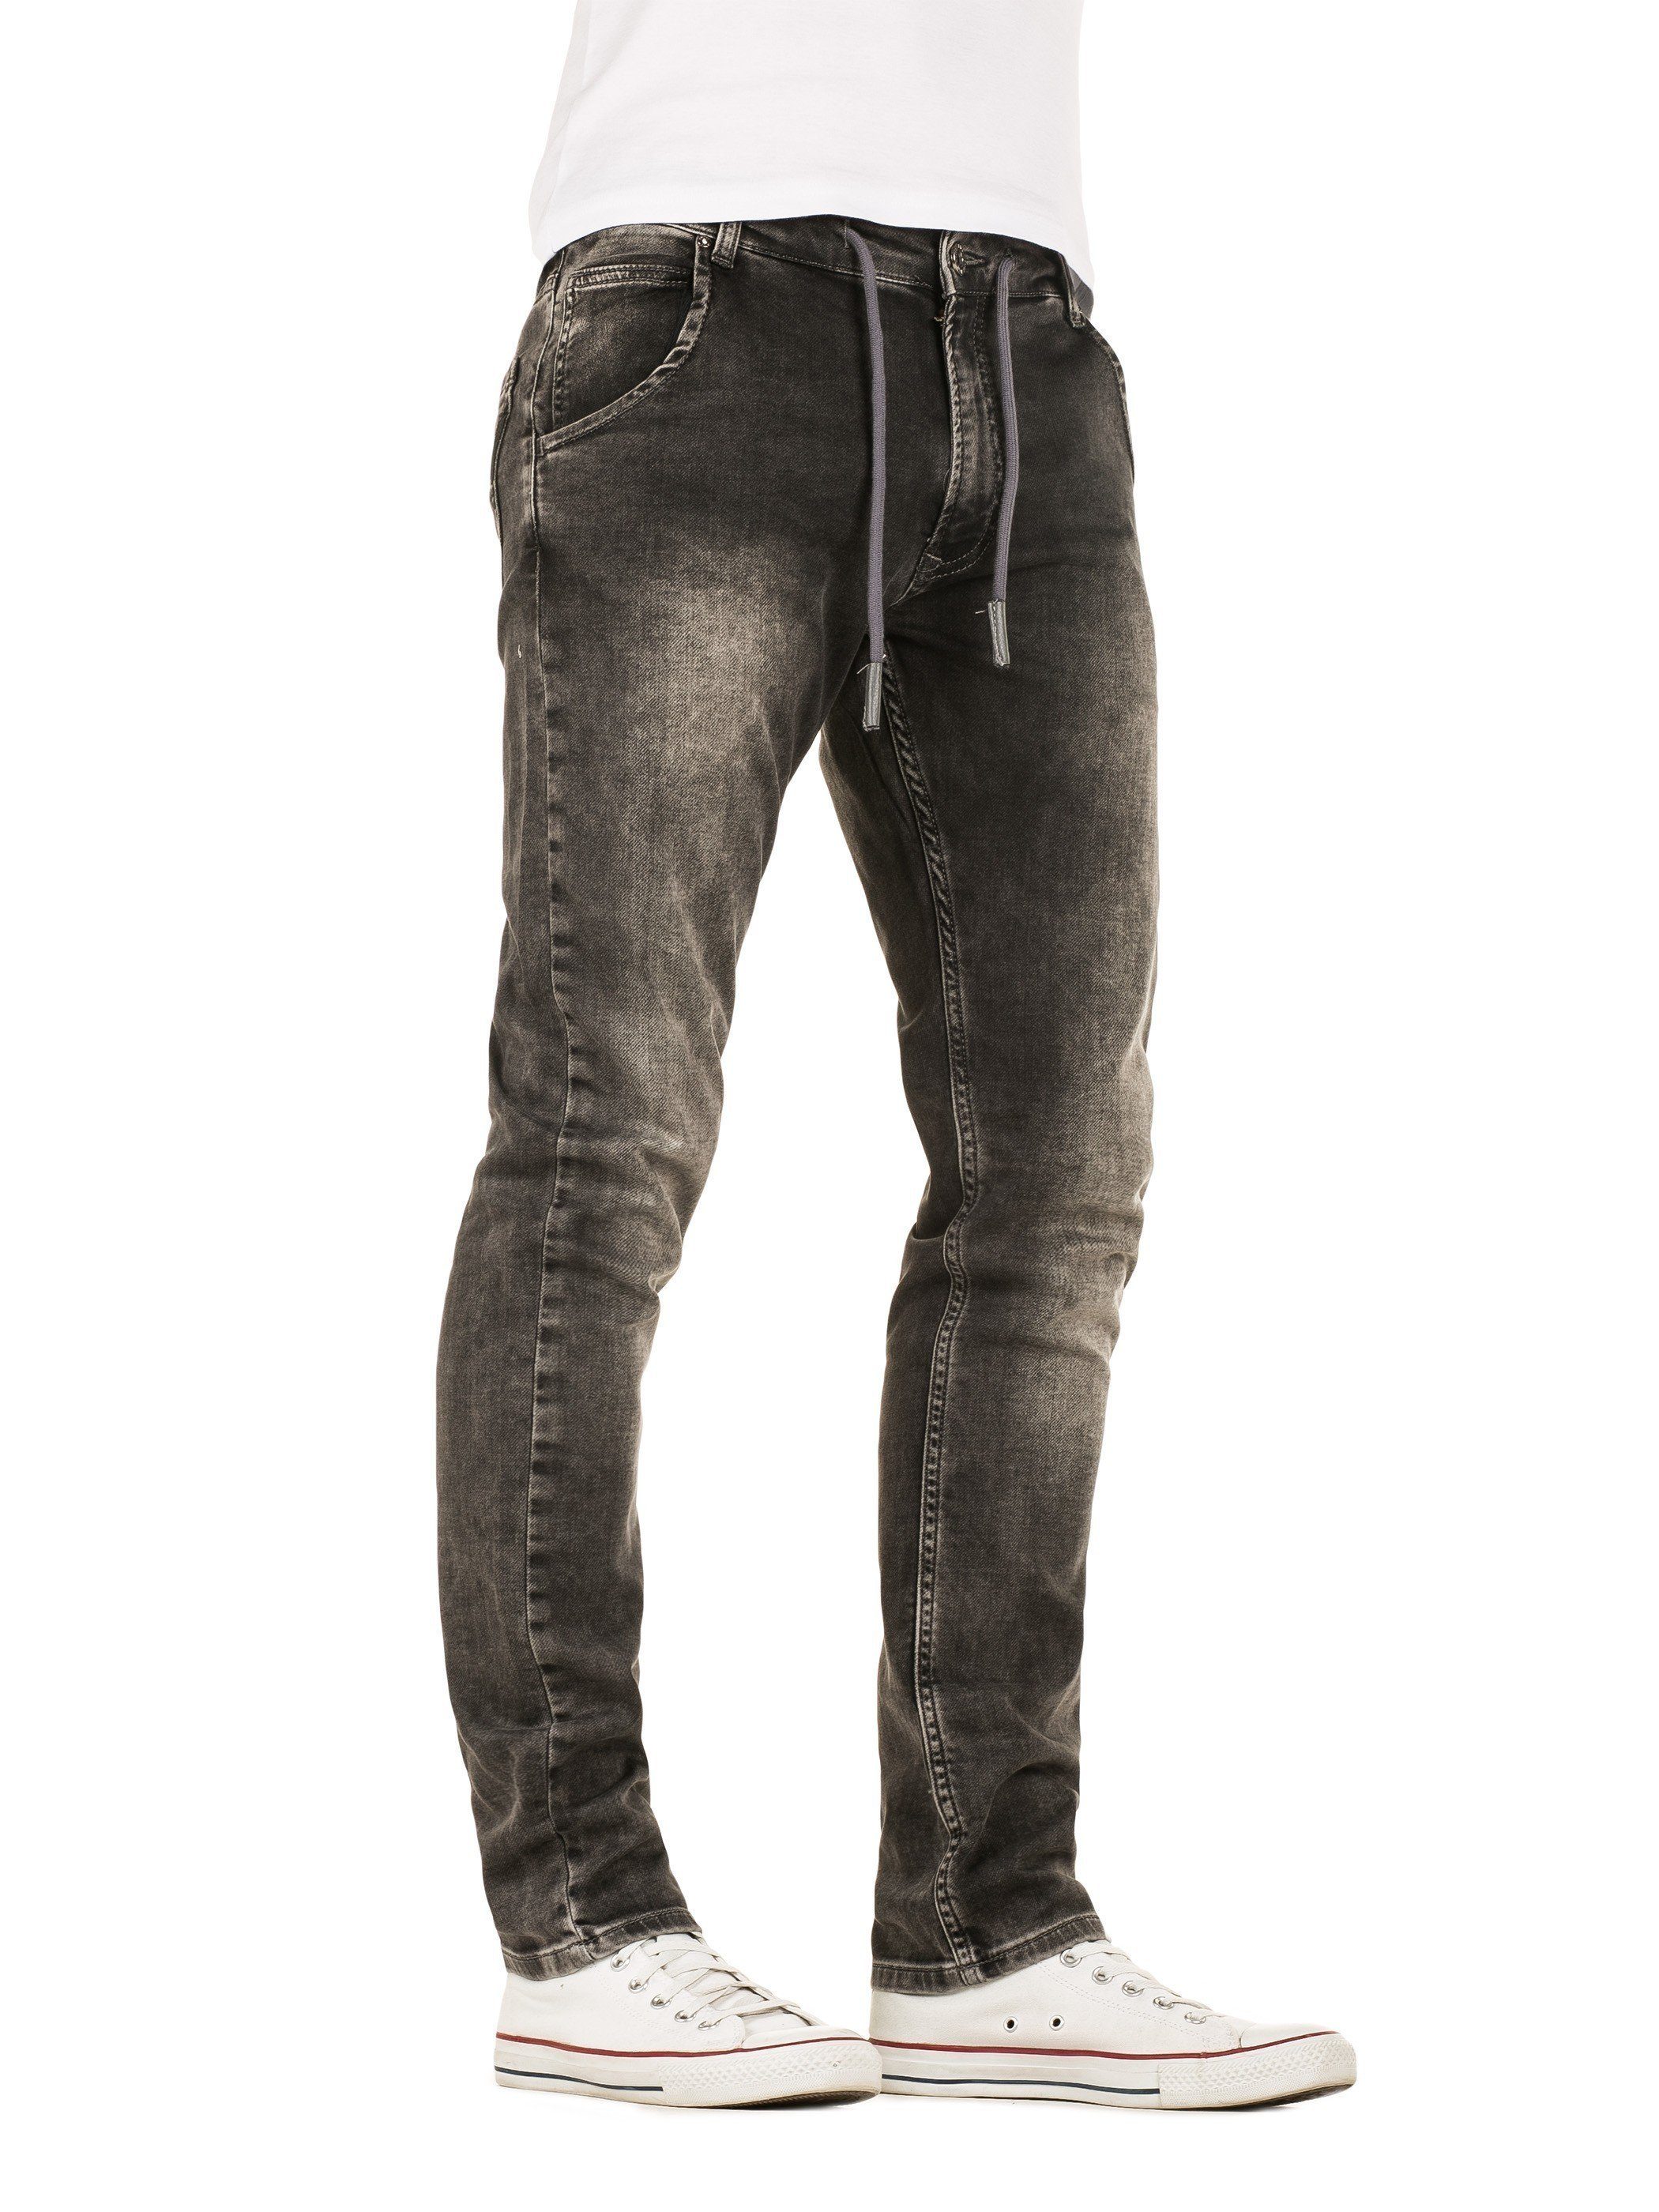 WOTEGA Slim-fit-Jeans grey Grau Hose 19000) Denim Jeans-Look in Joshua Jogging Herren in Jeans Jogginghose (raven Stretch Sweathosen